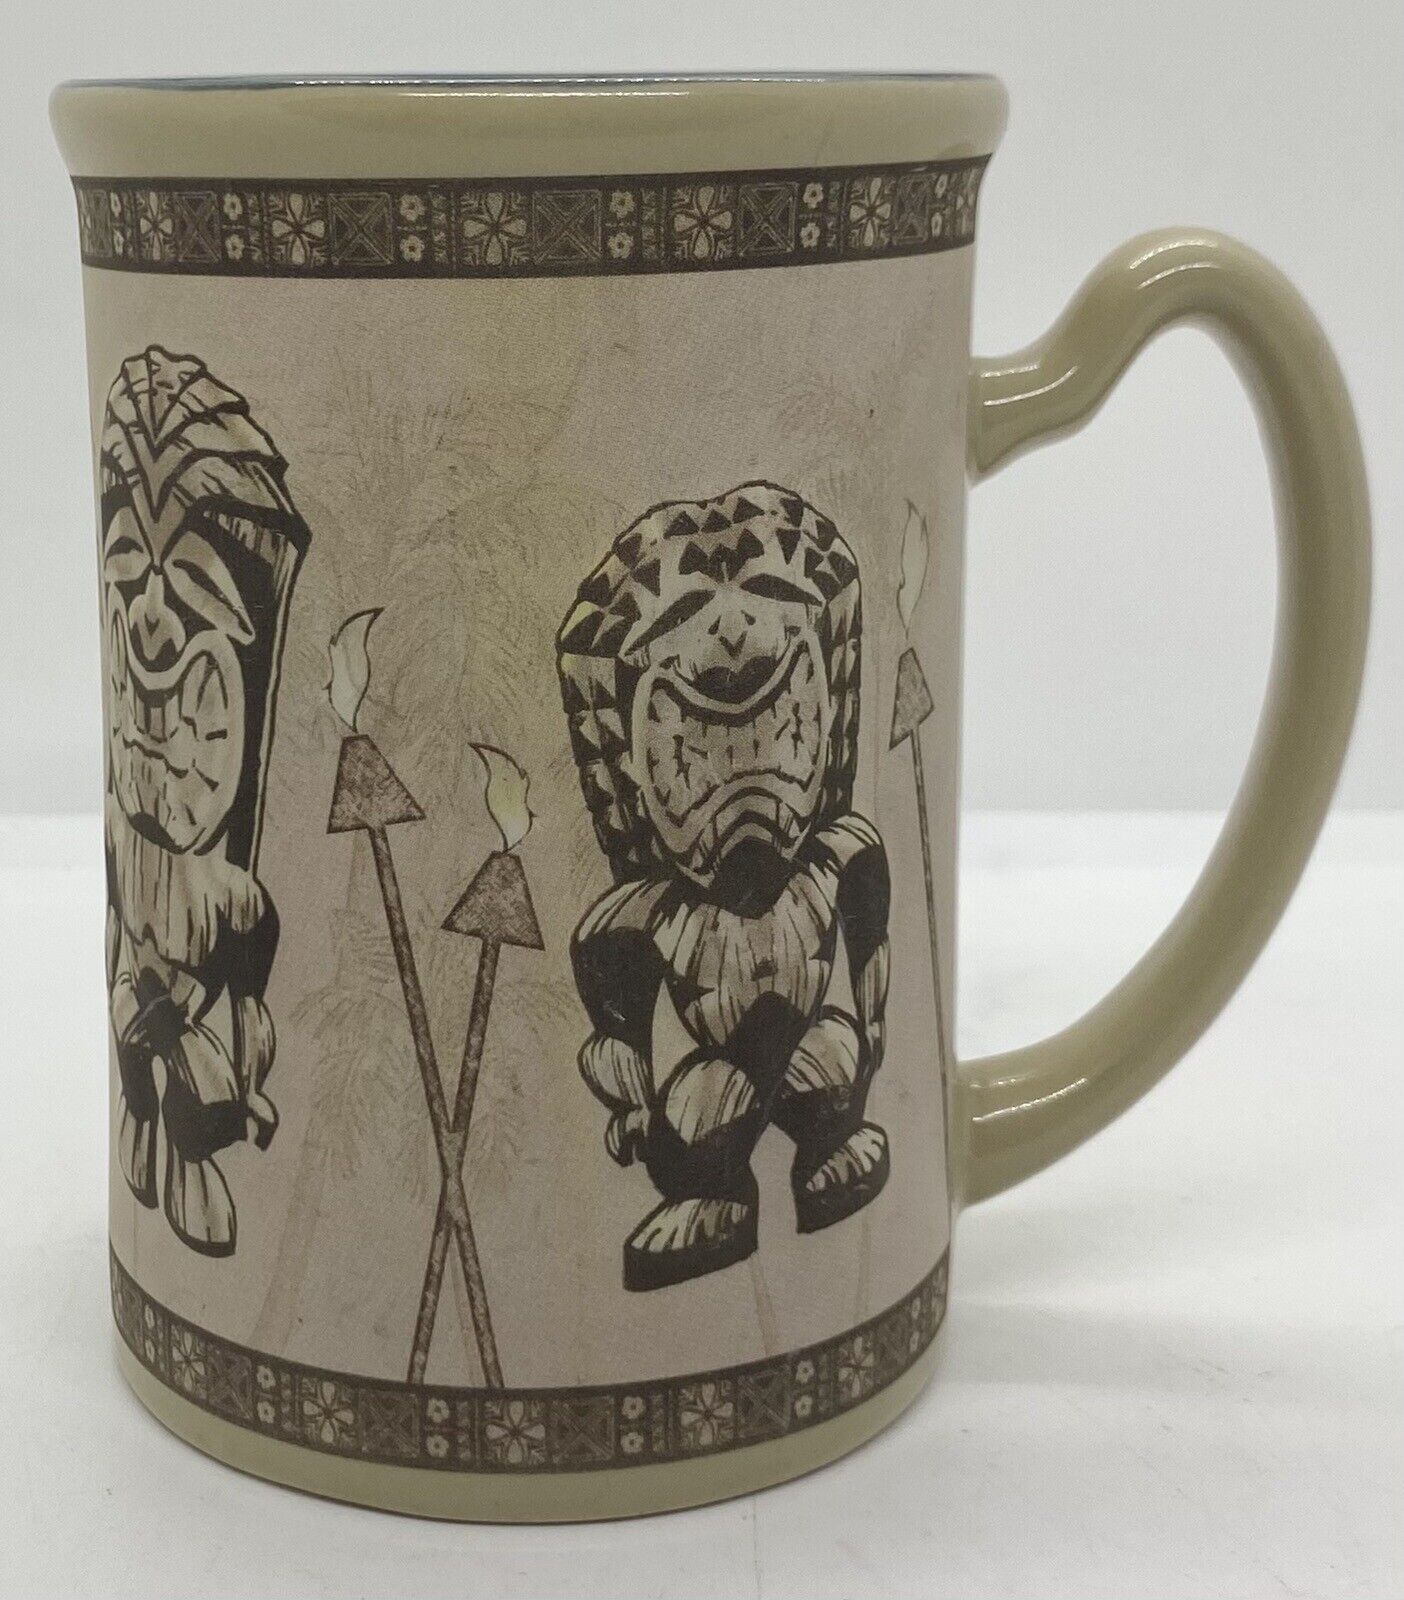 New 2005 Island Heritage Tiki Statues & Tiki Torches 3D Coffee Cup Mug